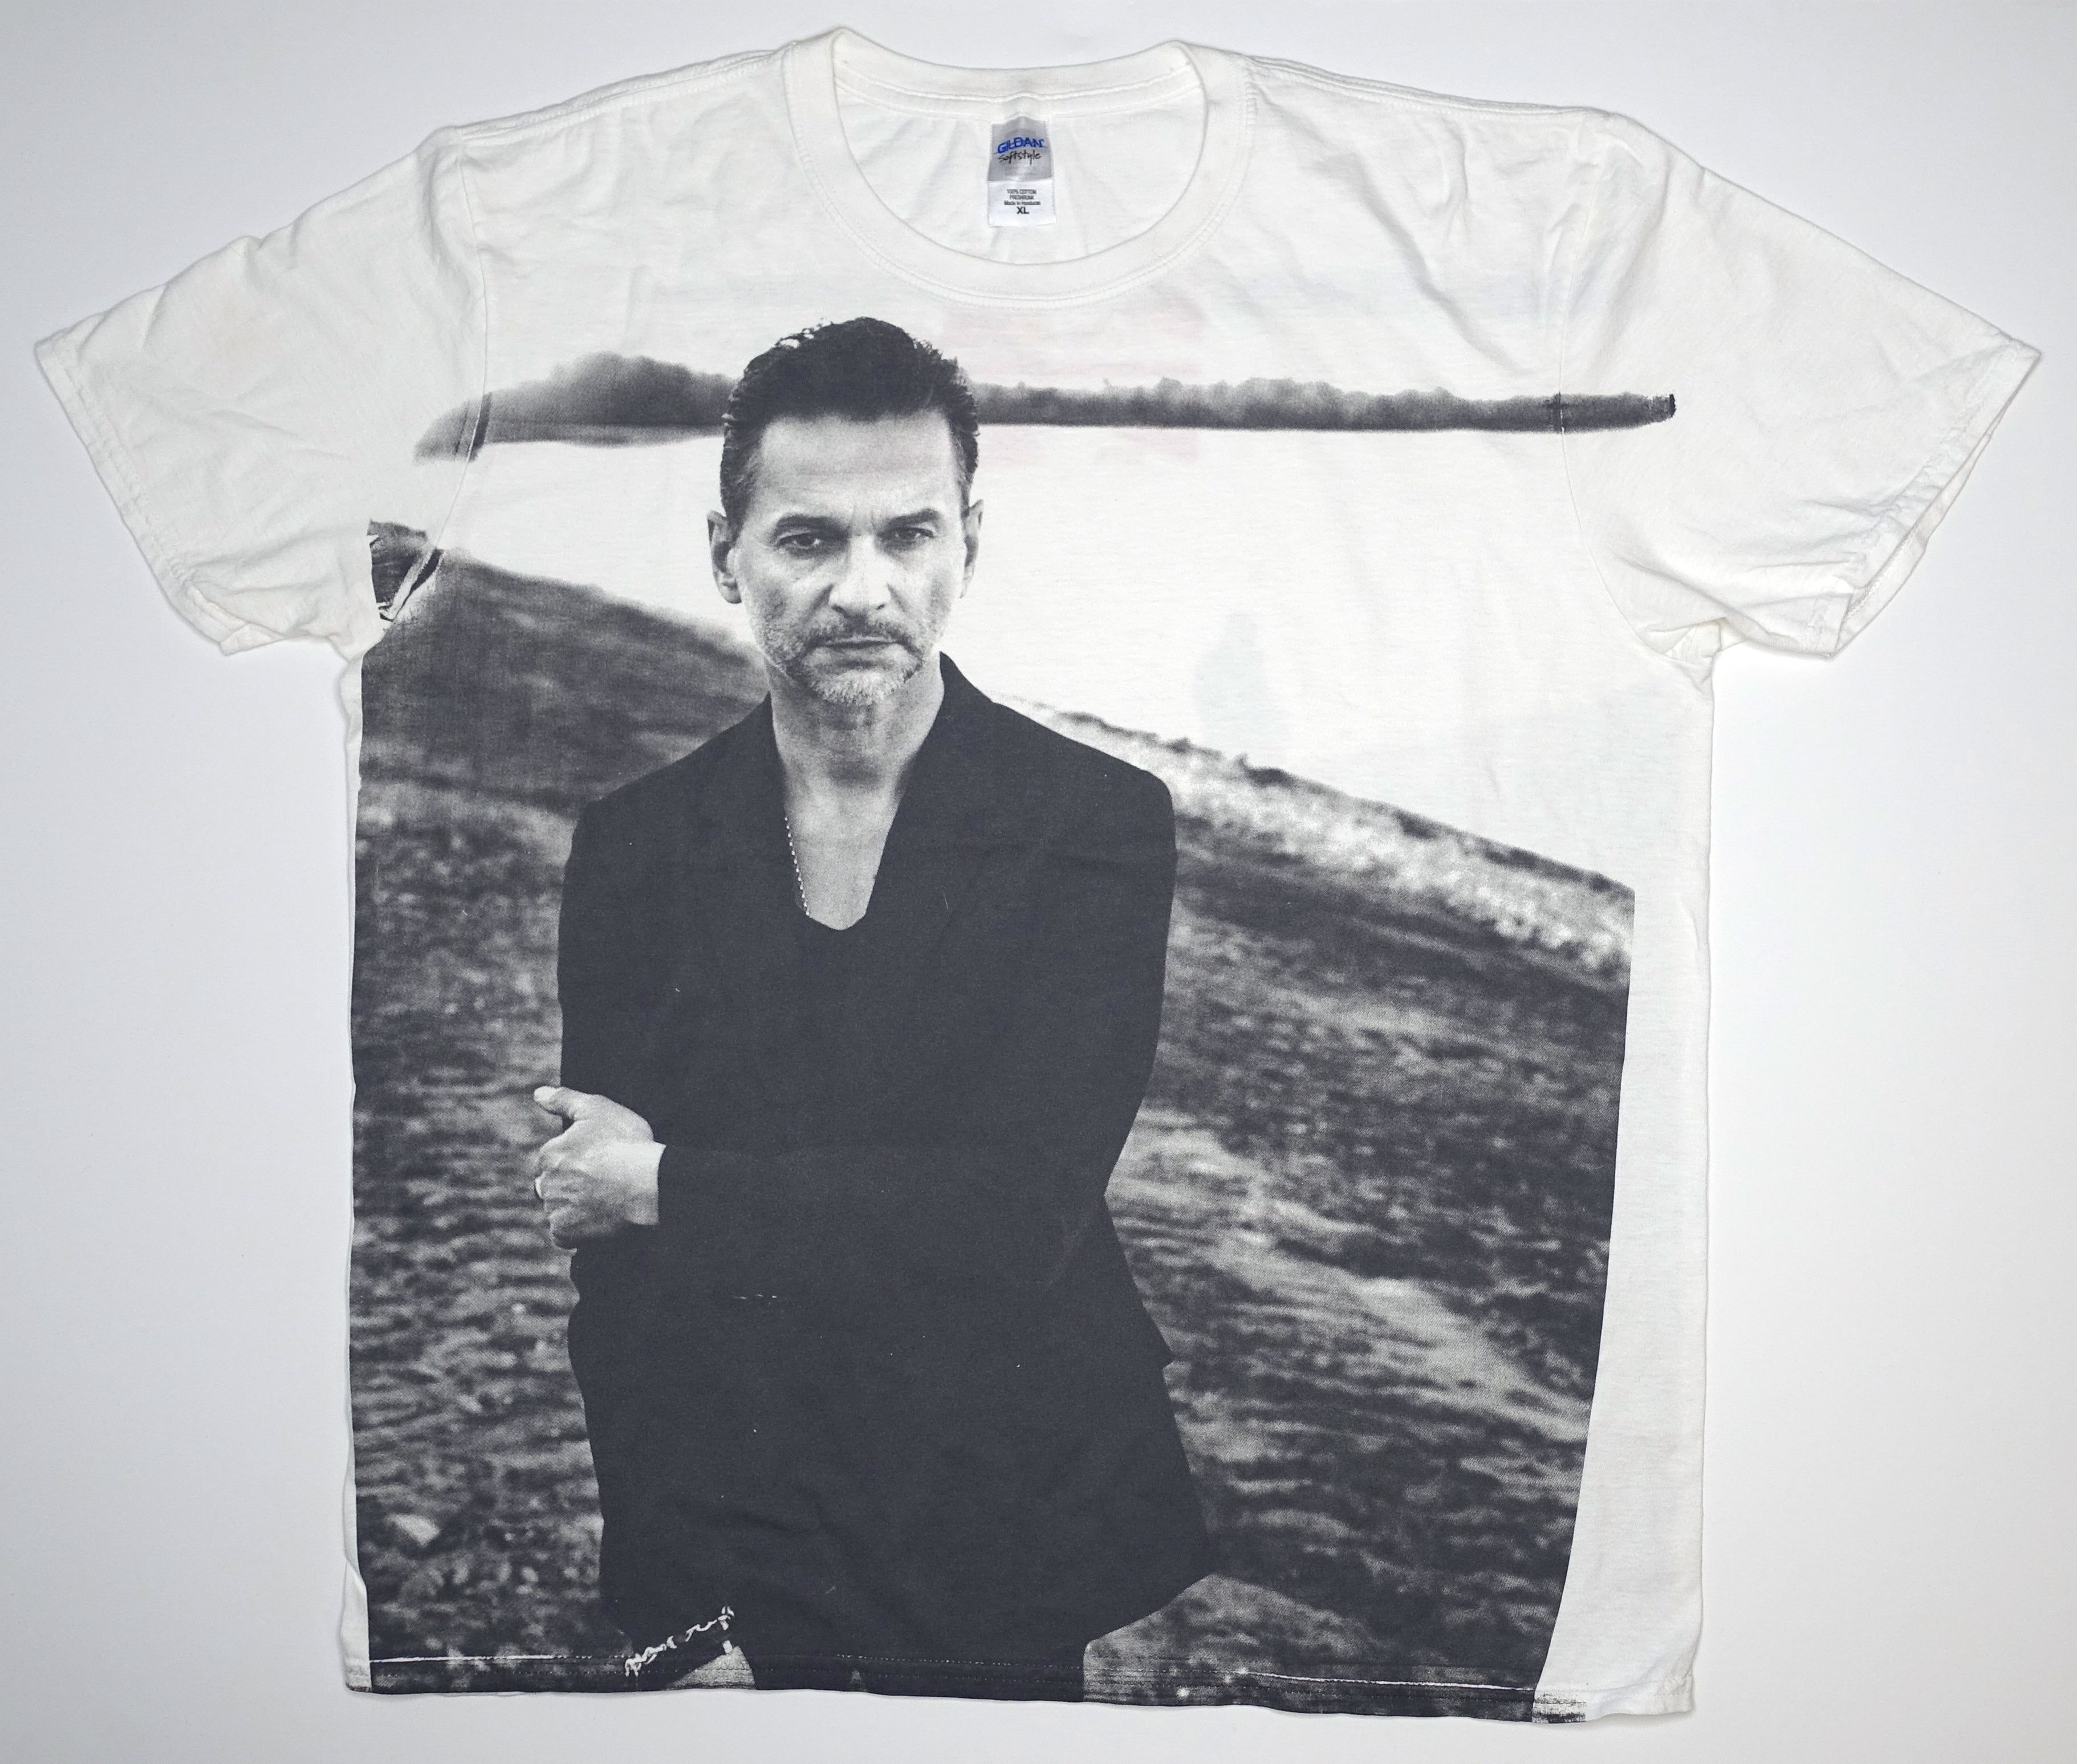 Depeche Mode – Delta Machine 2013 North American Tour Shirt Size XL